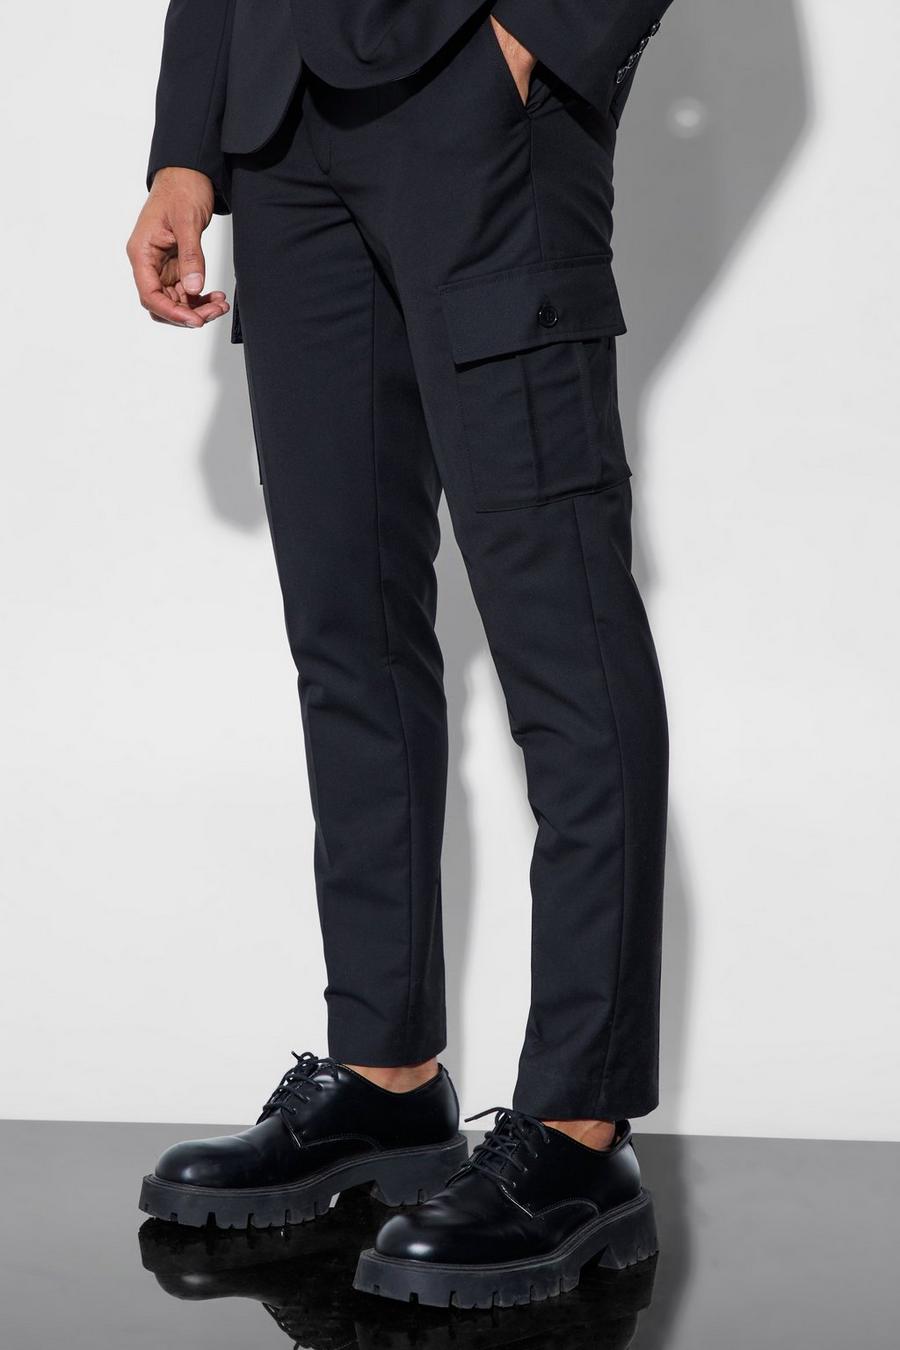 Pantaloni completo Cargo Skinny Fit, Black